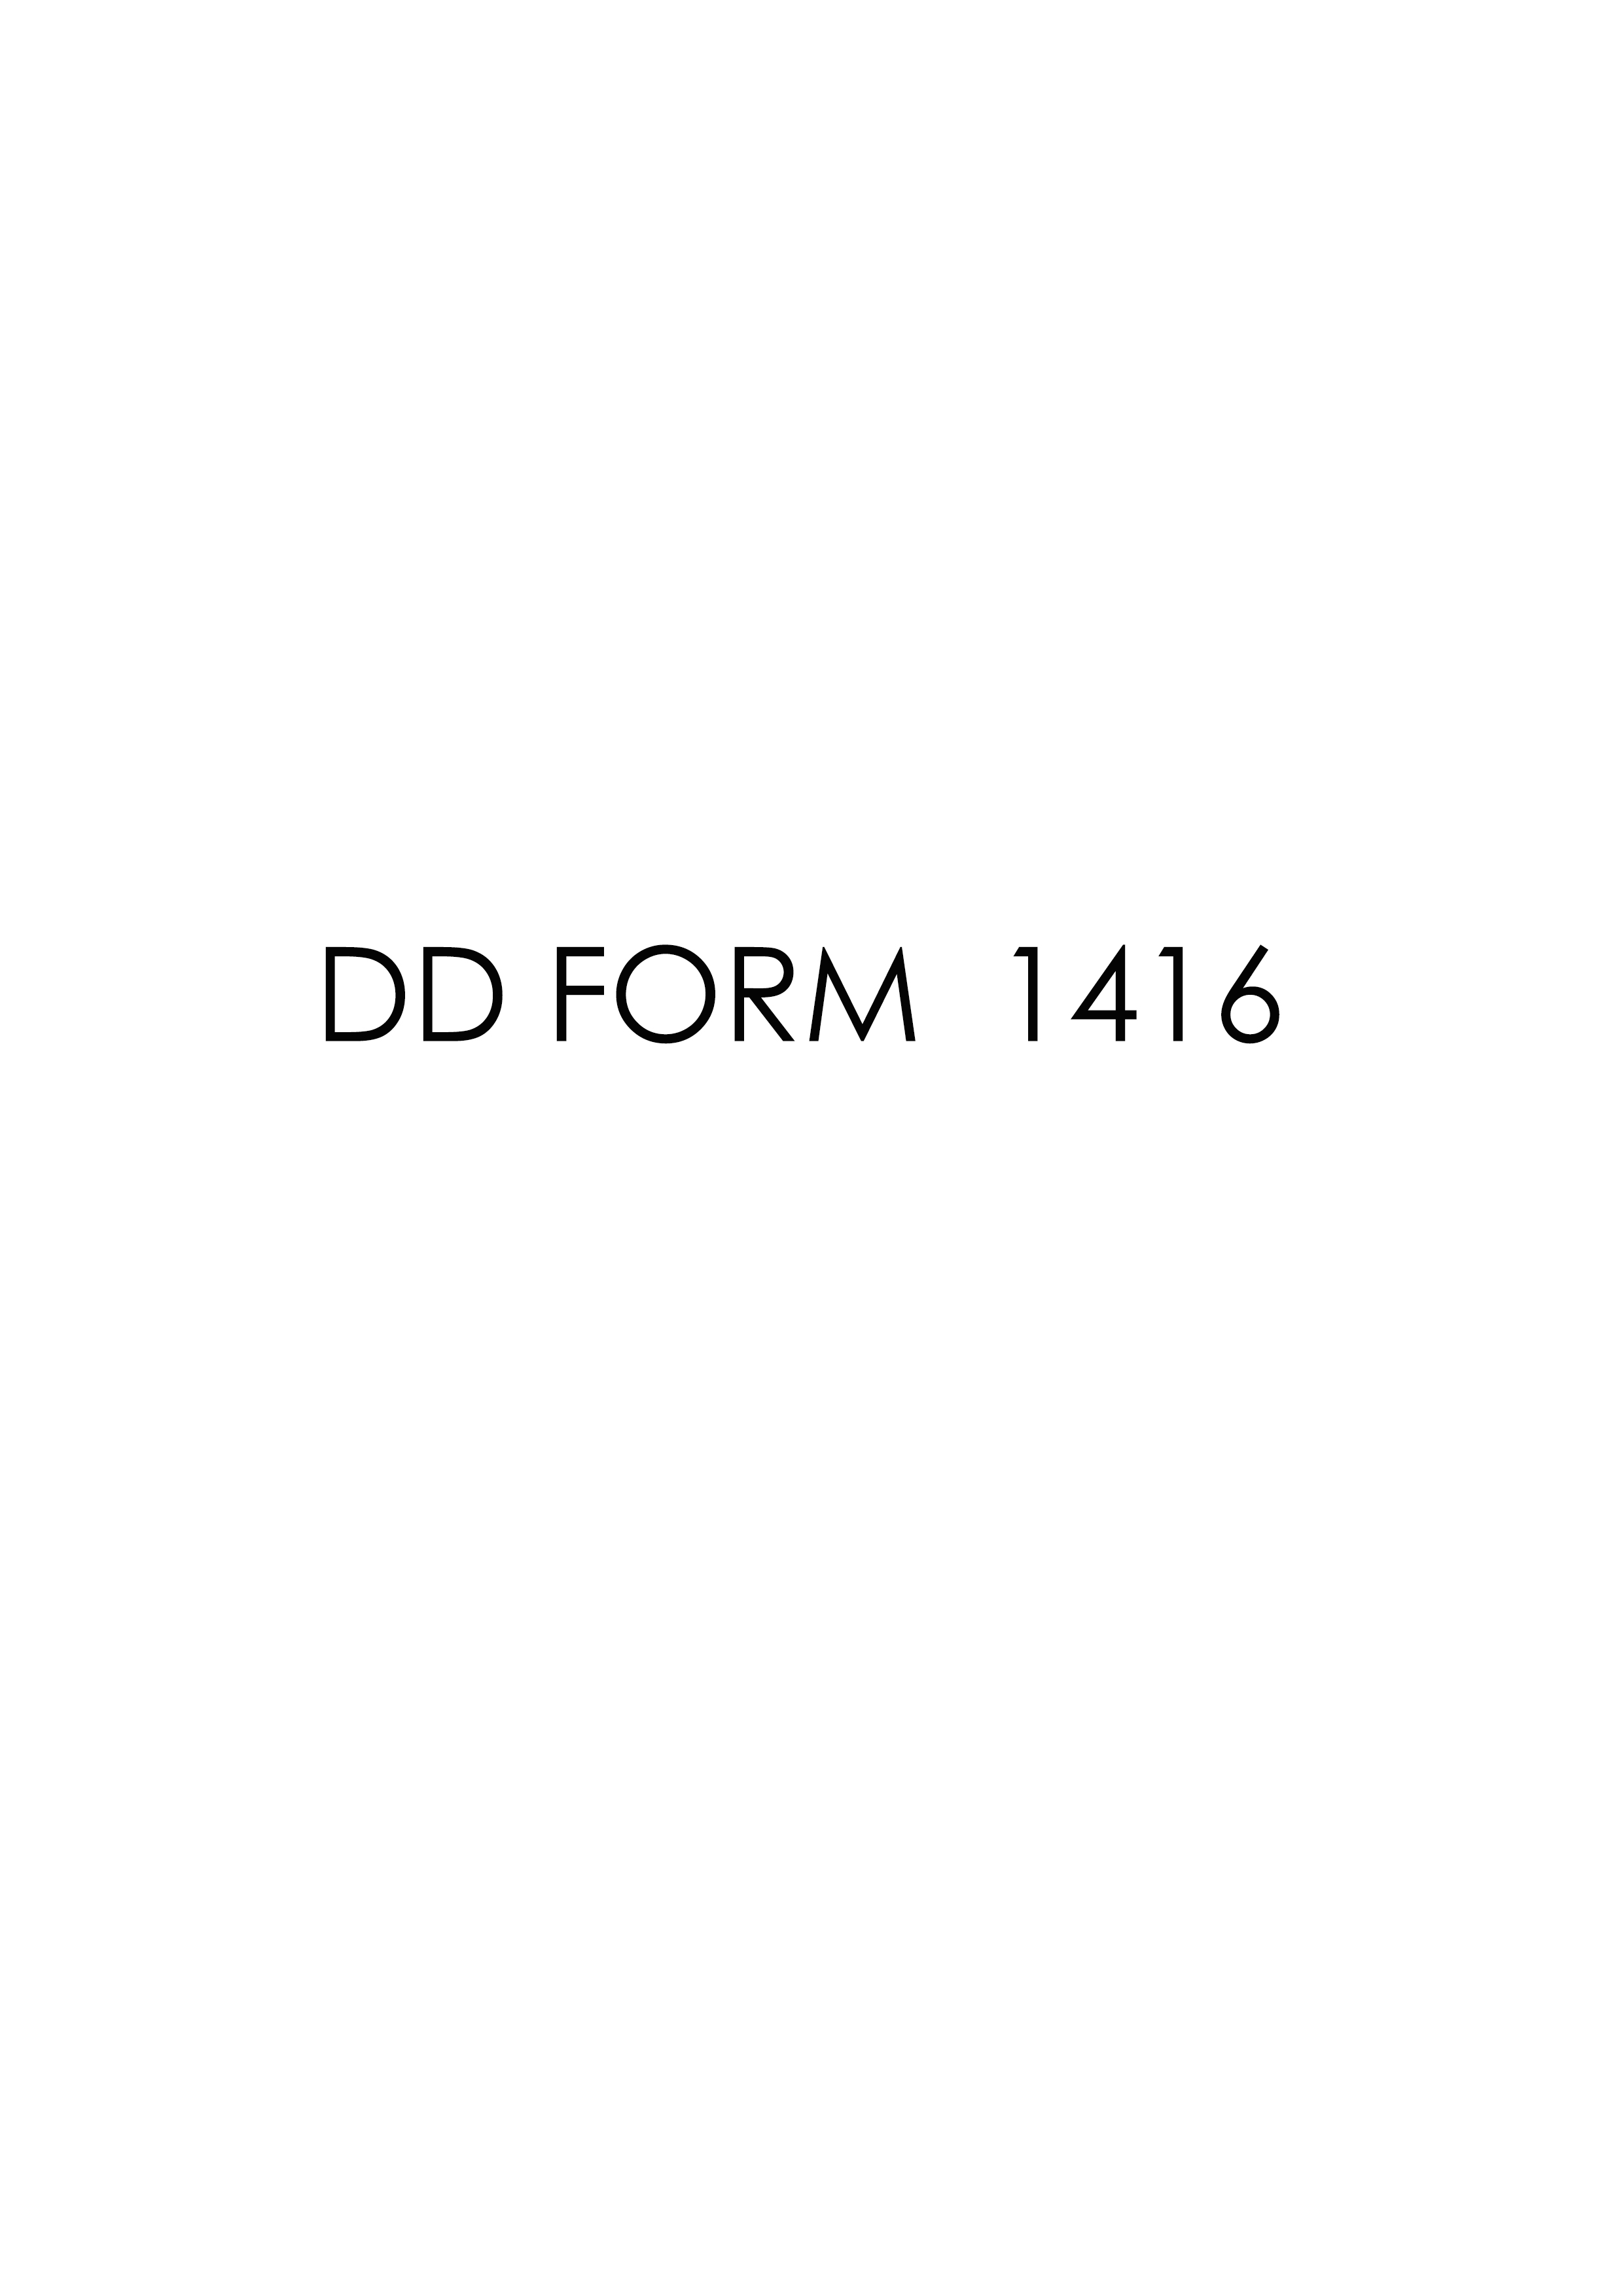 Download dd 1416 Form